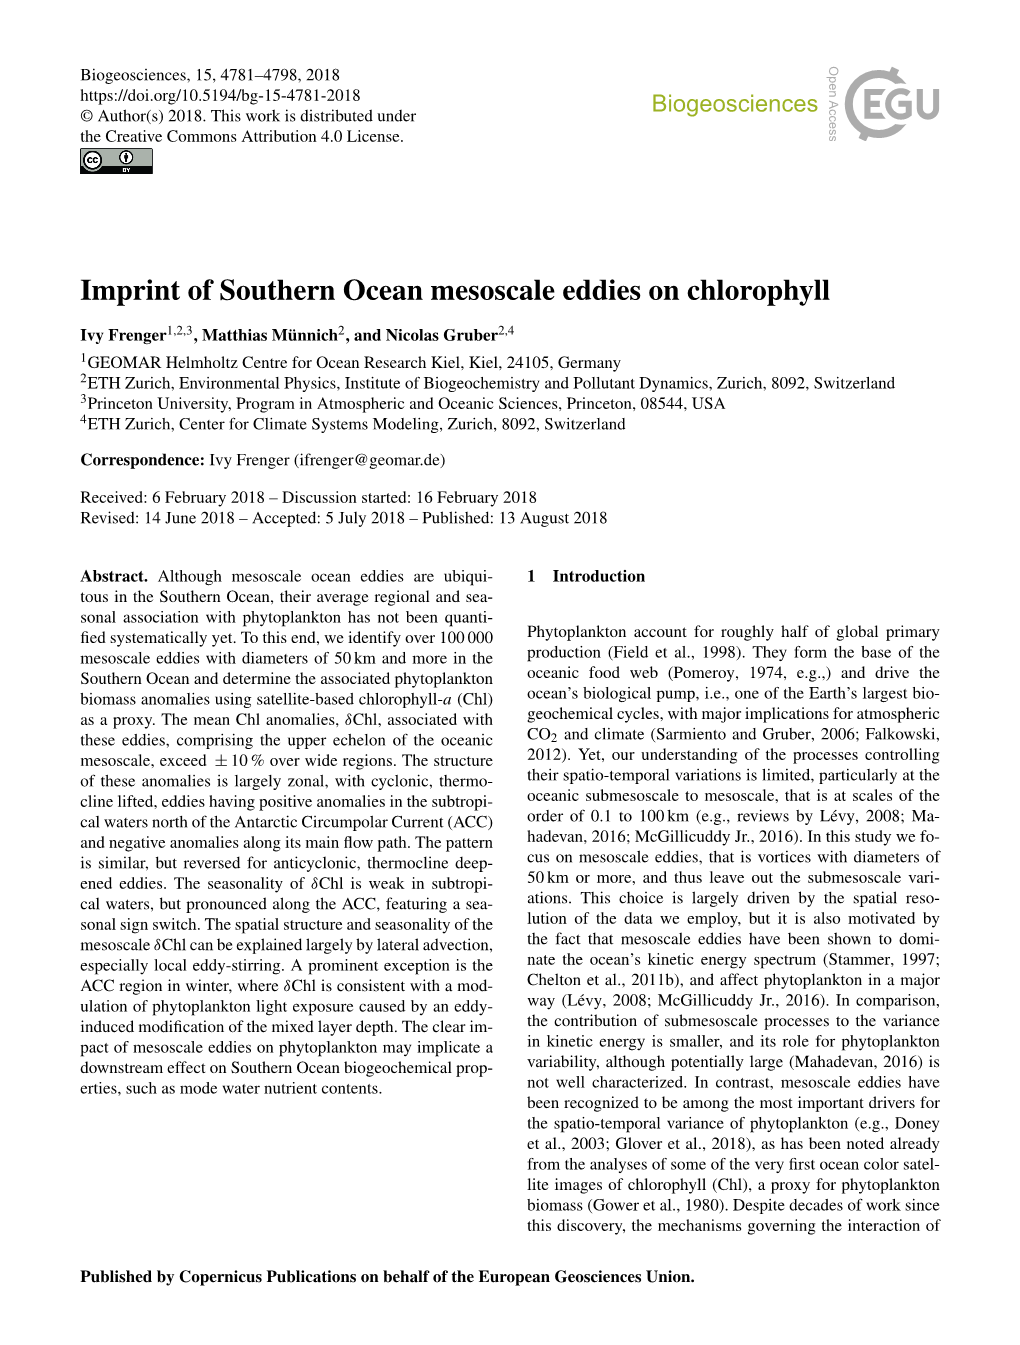 Imprint of Southern Ocean Mesoscale Eddies on Chlorophyll